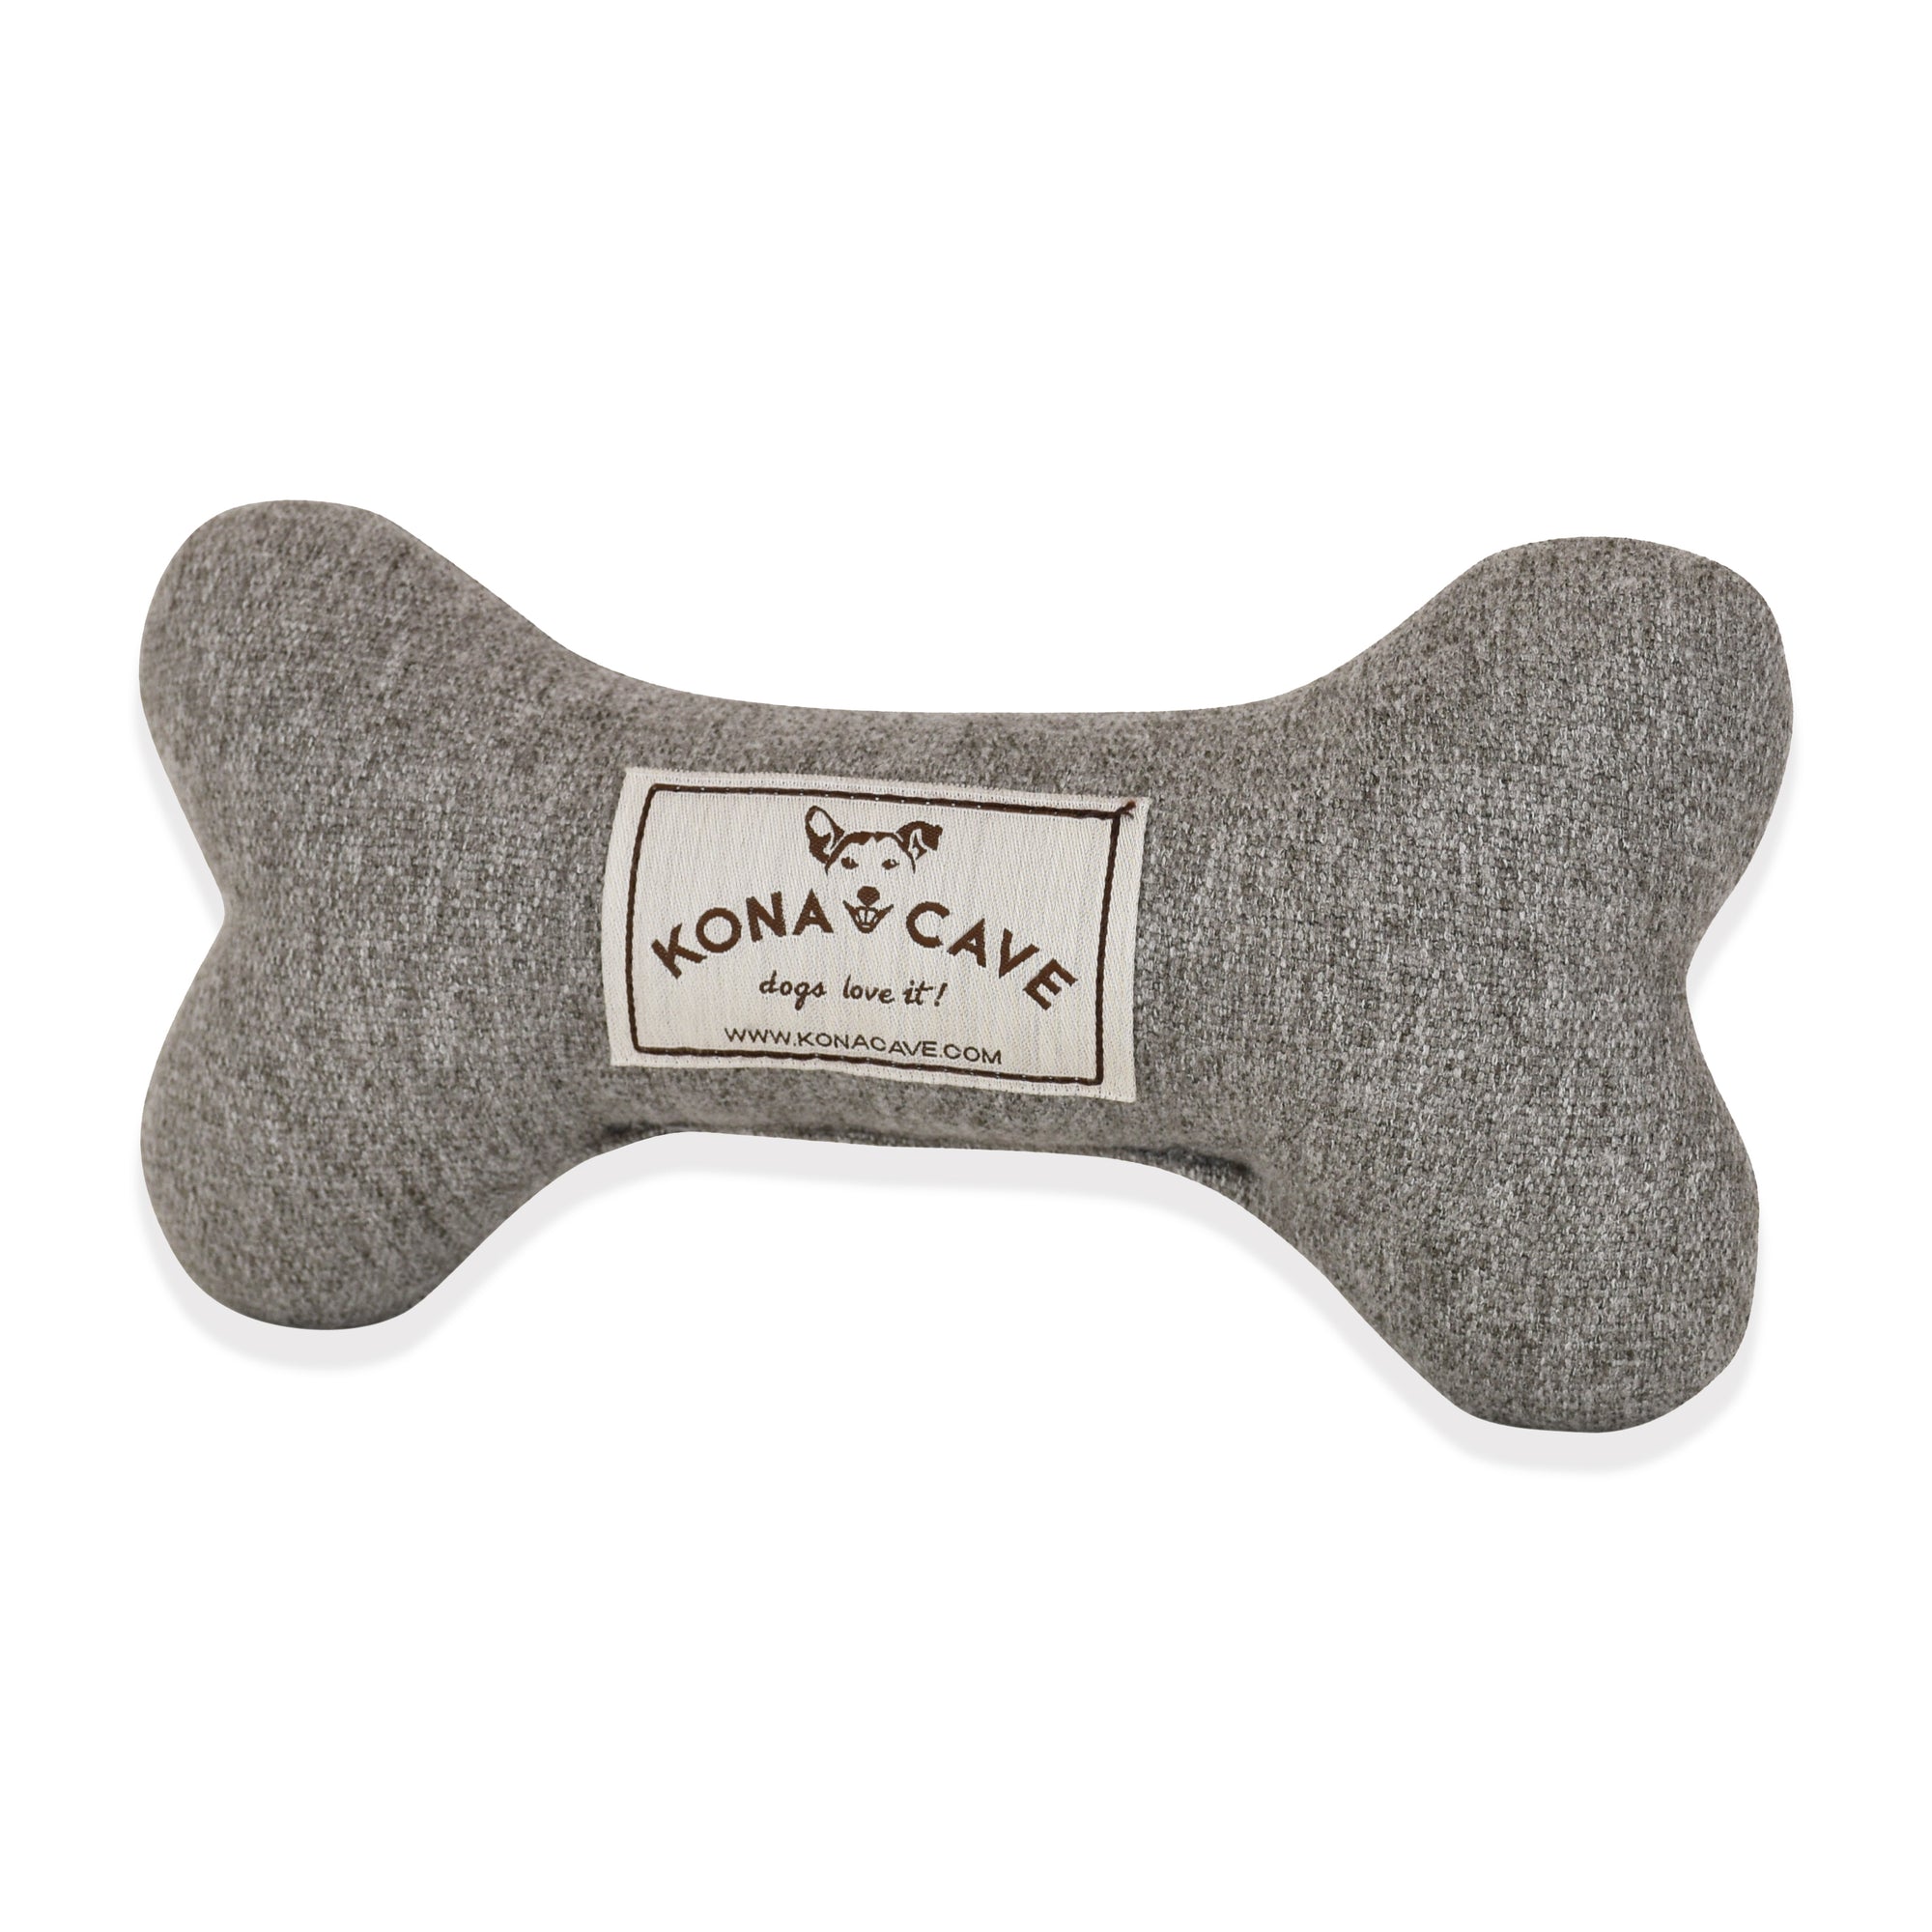 Doggy Décor Set - Grey Flannel with Vegan Leather Trim